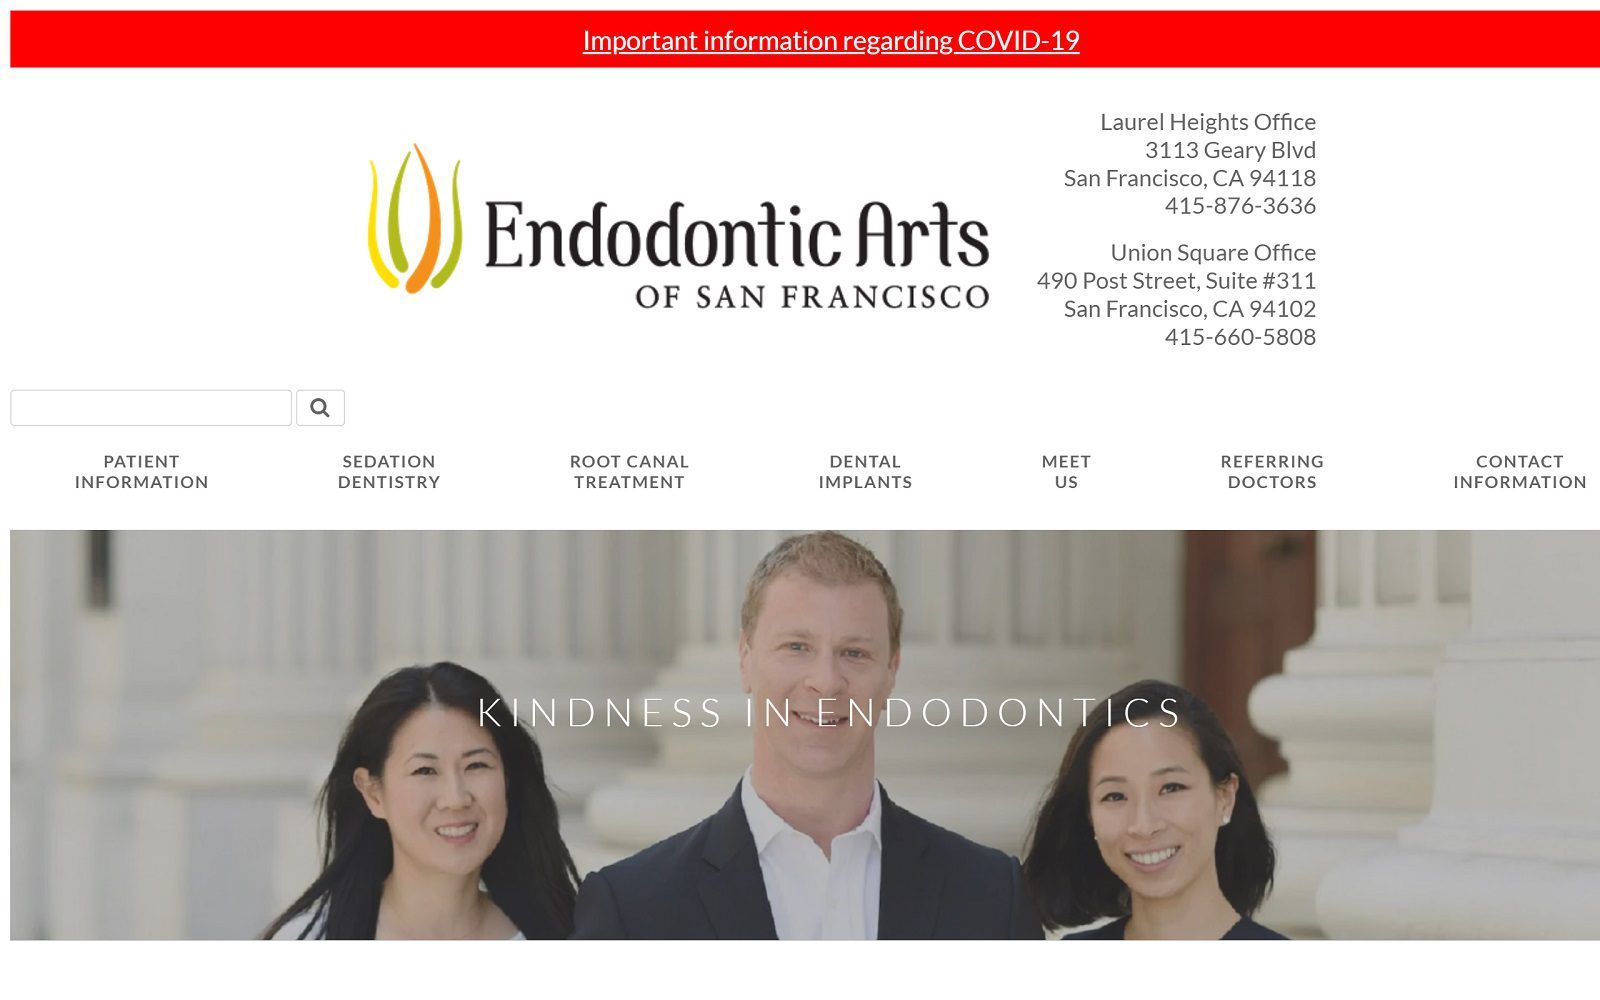 The screenshot of endodontic arts of san francisco website